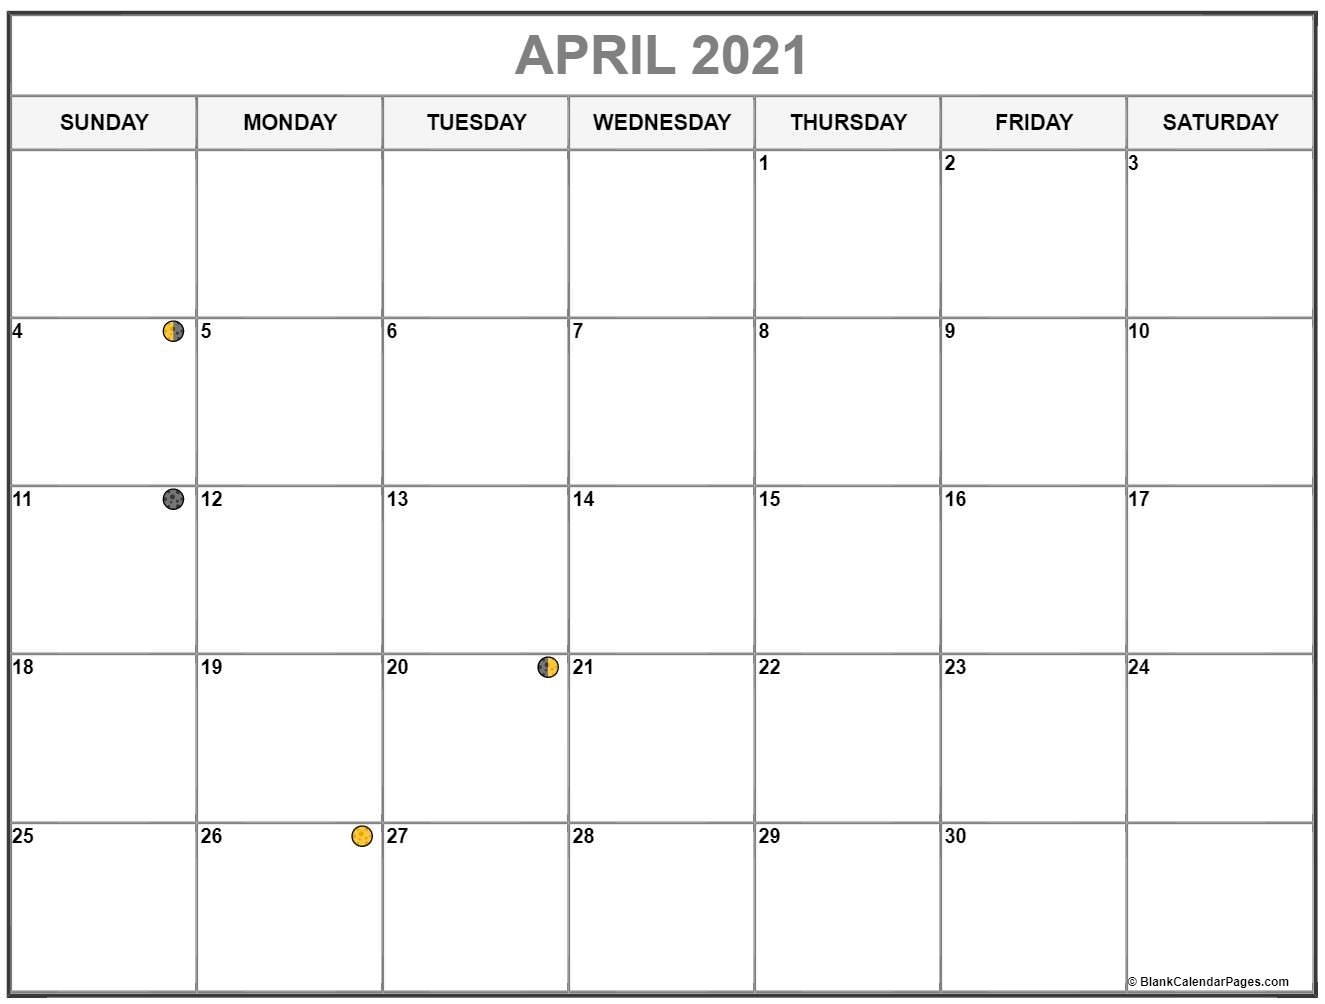 April 2021 Lunar Calendar | Moon Phase Calendar Lunar Calendar August 2021